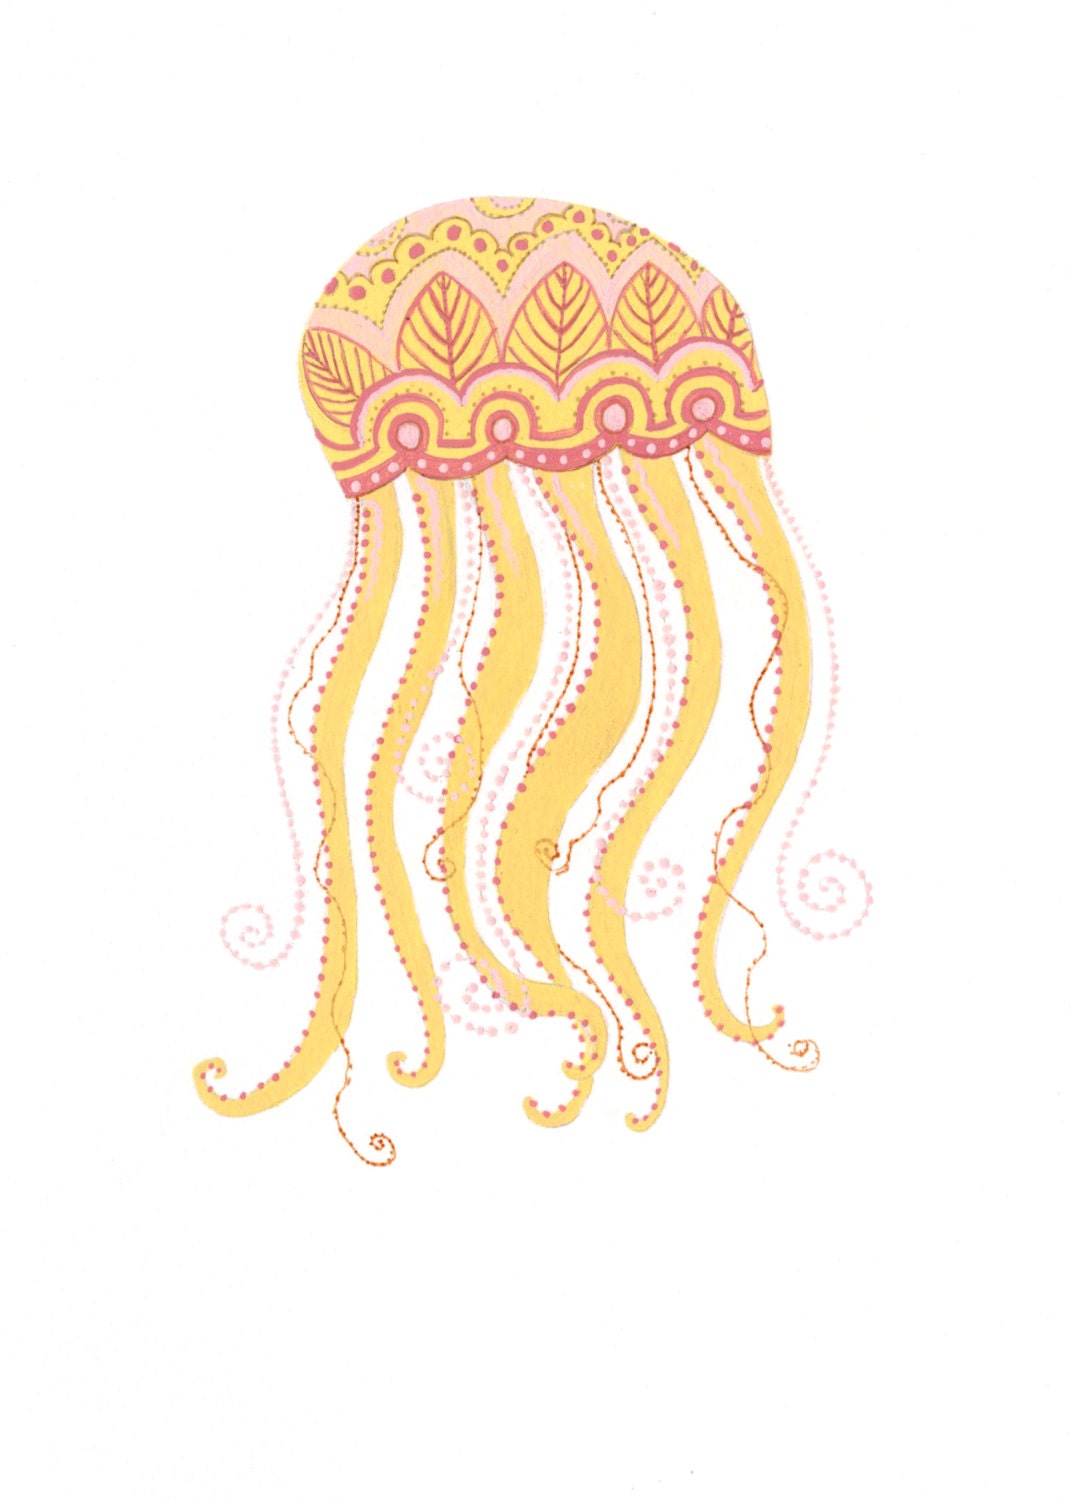 Jellyfish. Sea Creature. Yellow, pink. Decorative illustration. 5x7 print - thenorthcountrygirl